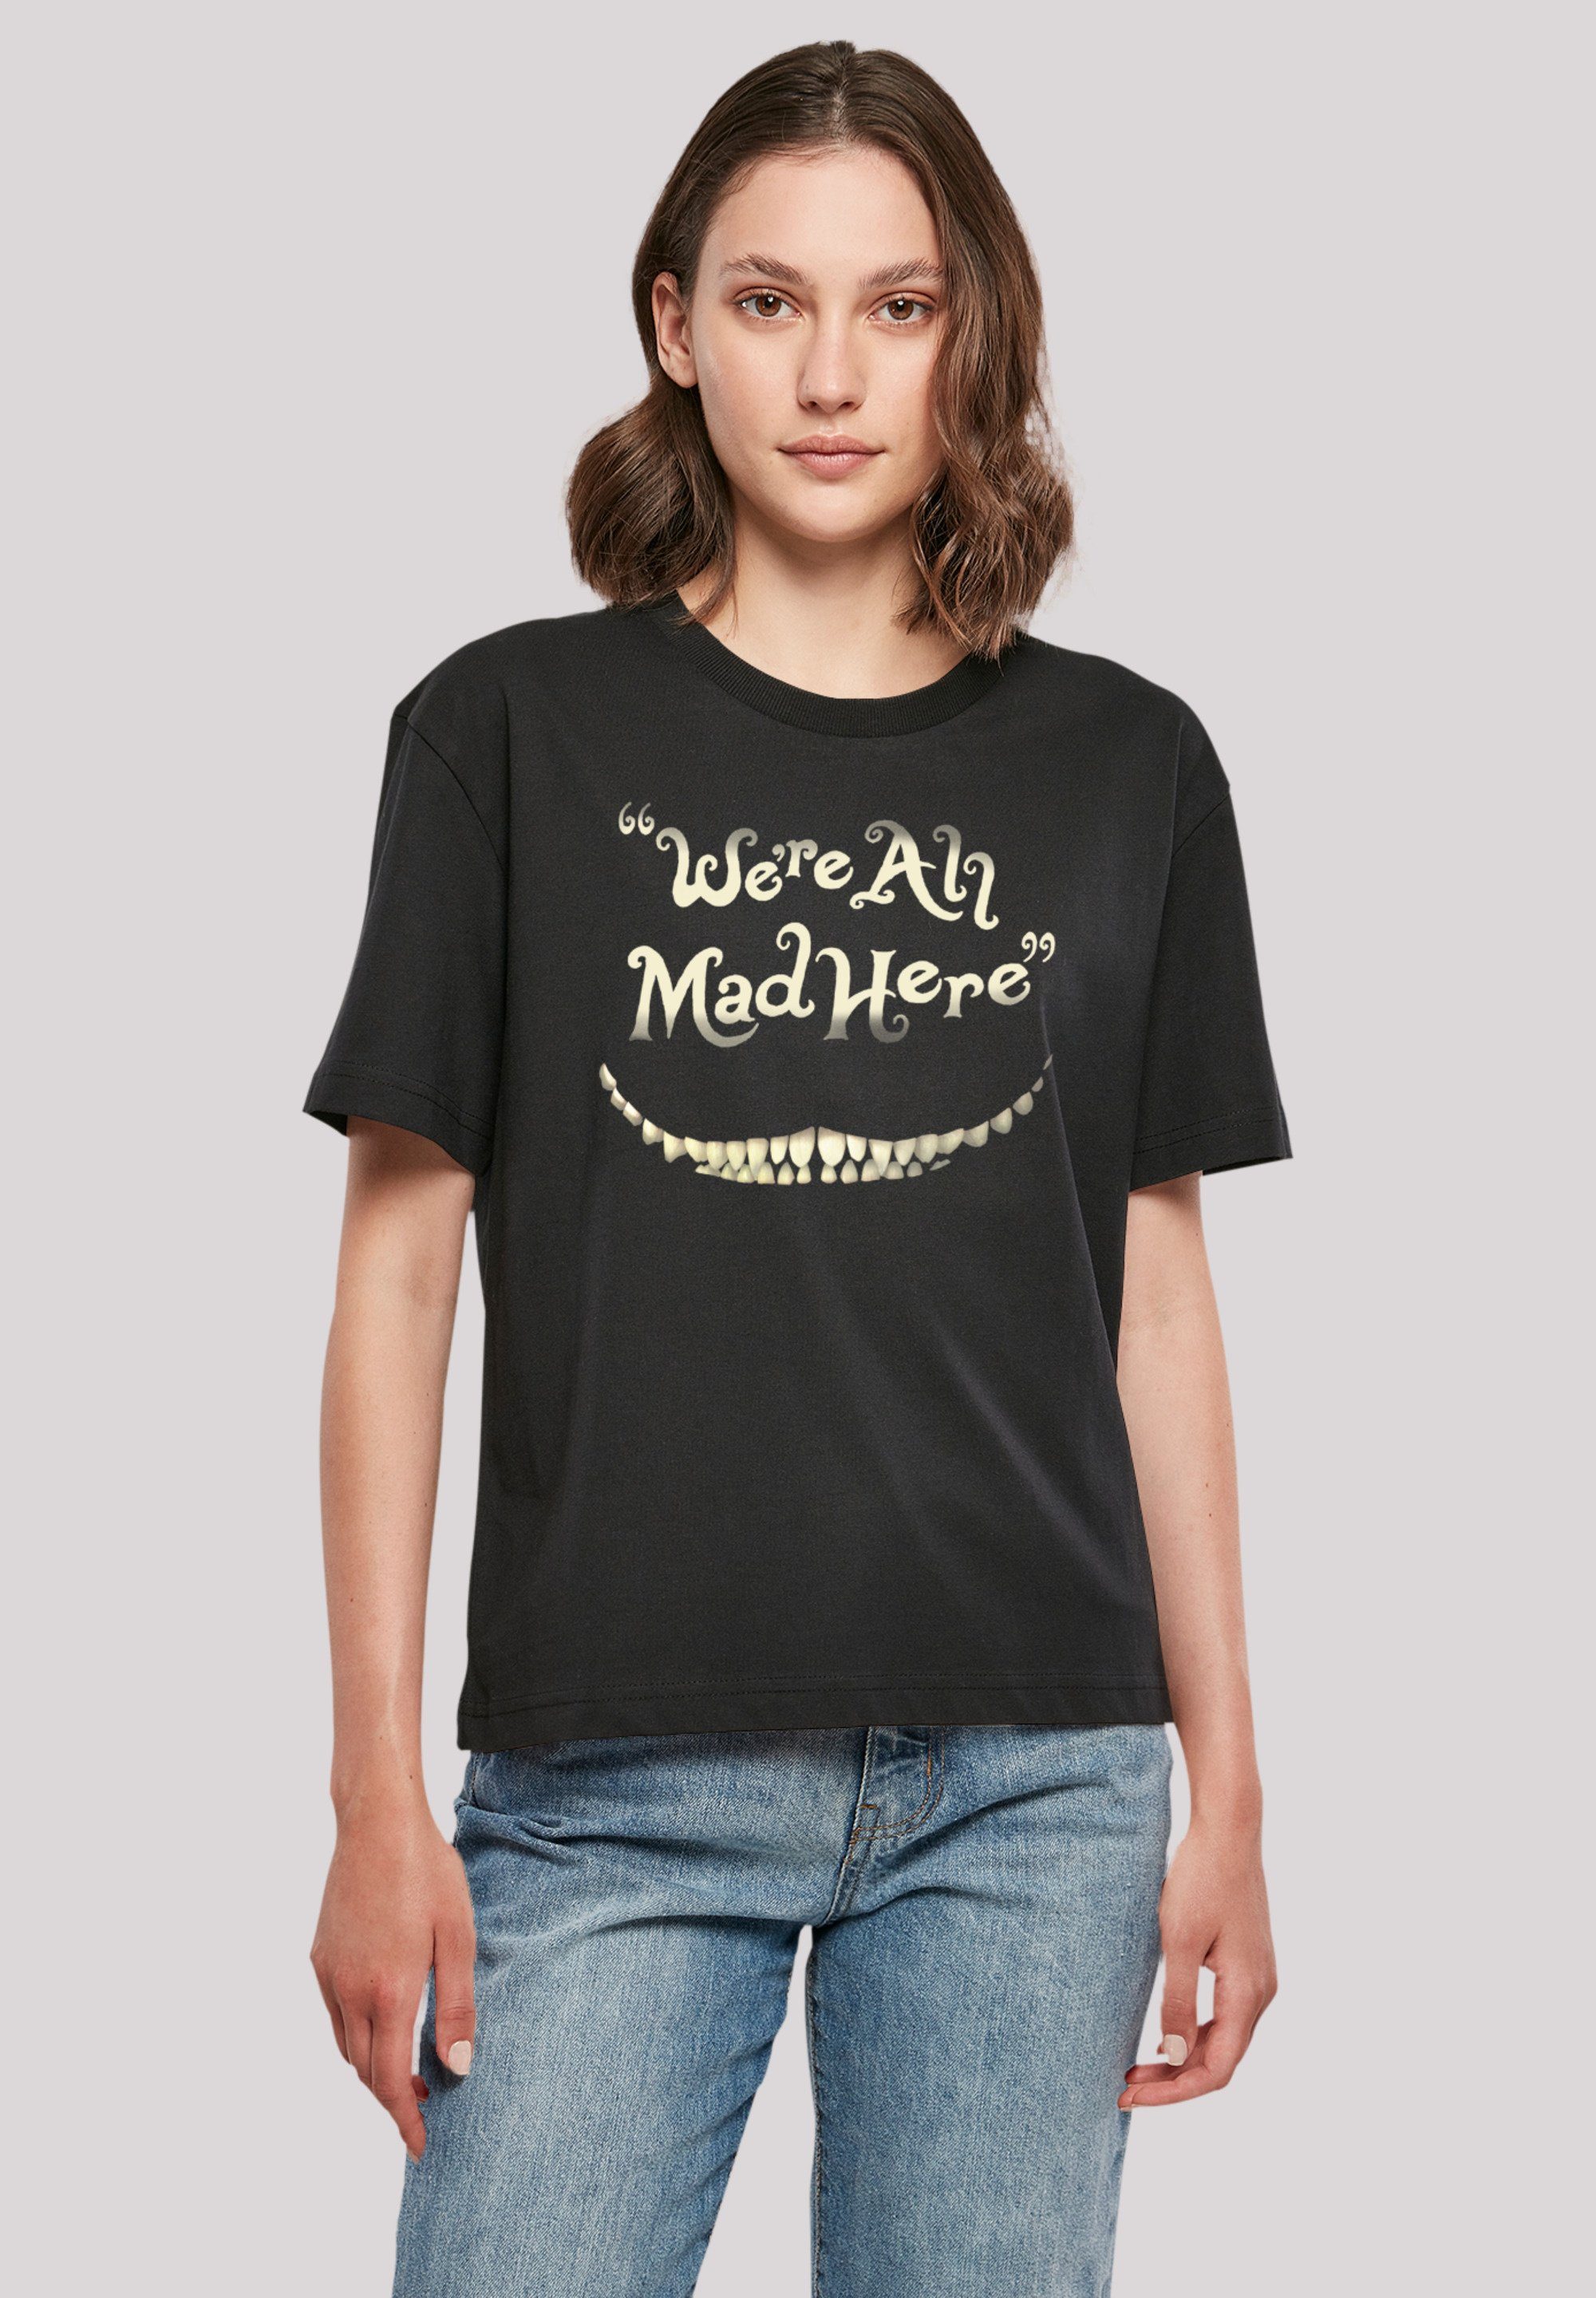 F4NT4STIC T-Shirt Disney Alice im Wunderland Mad Here Smile Premium Qualität | T-Shirts